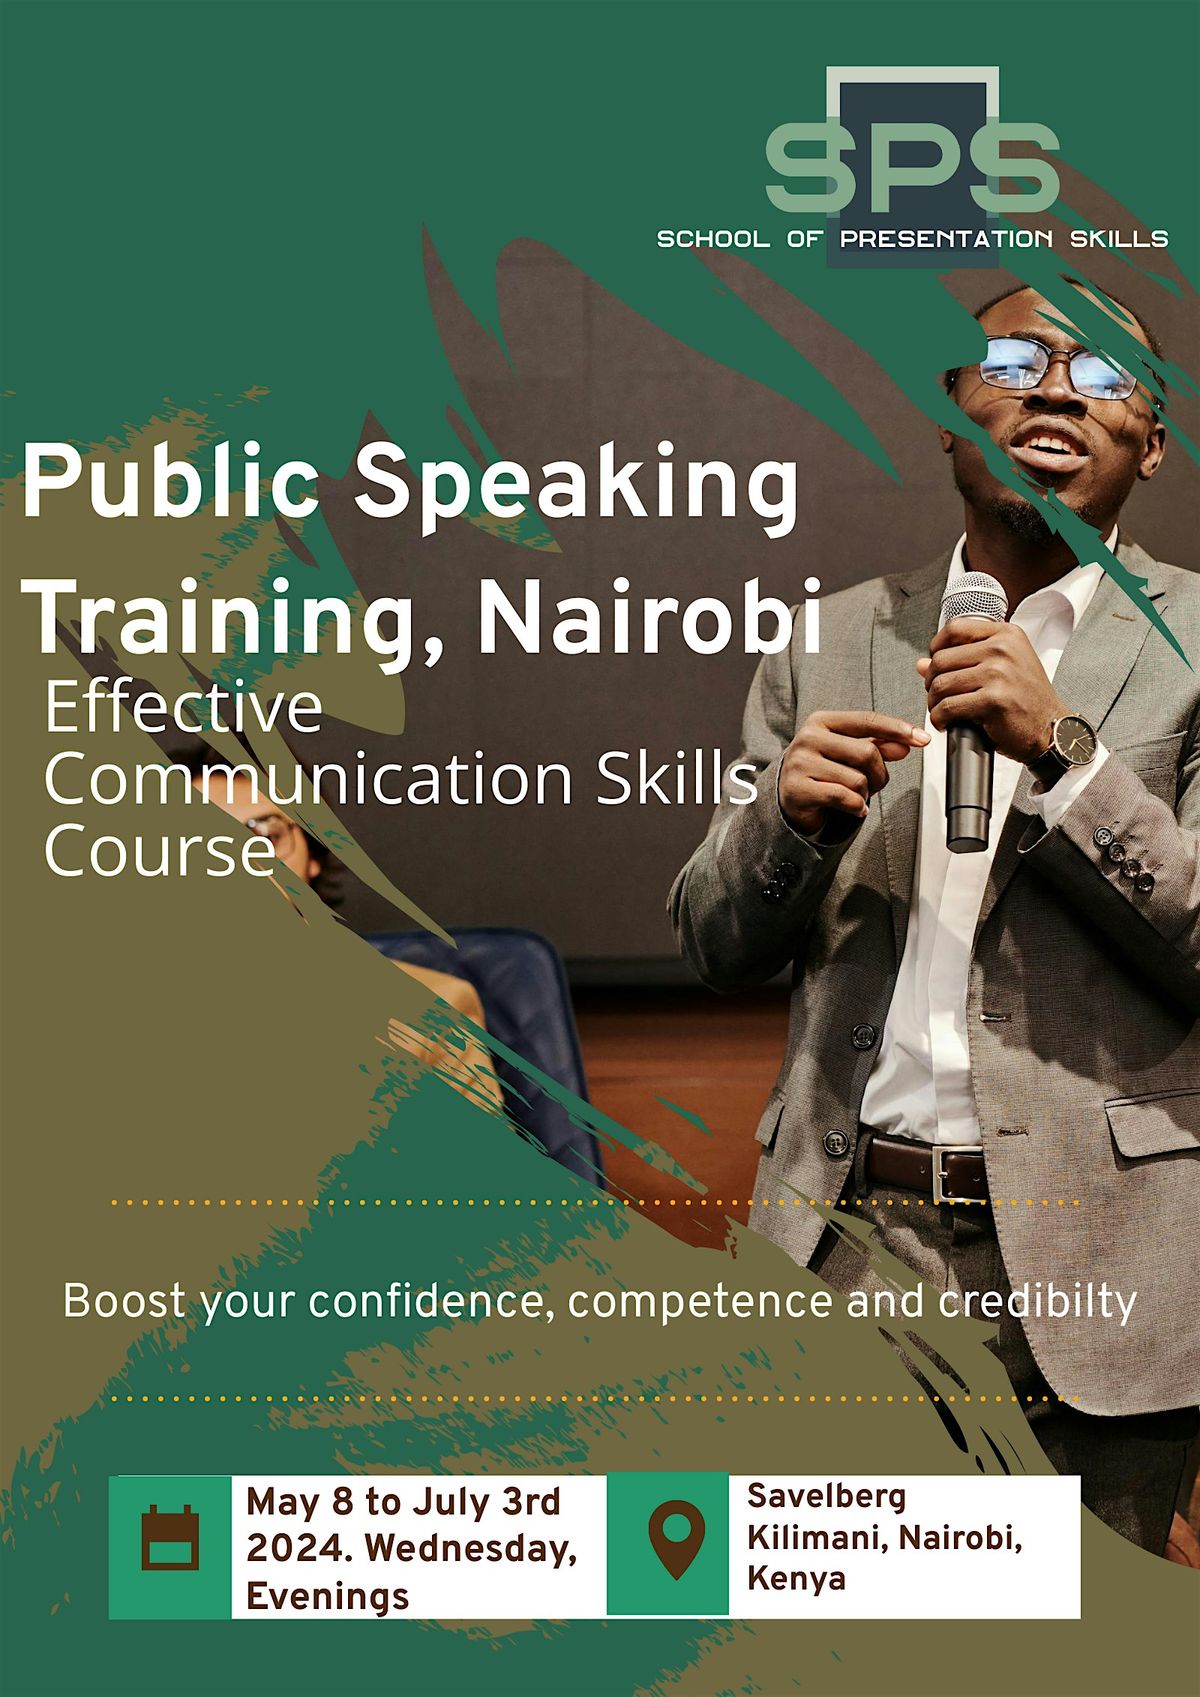 Public Speaking Training in Nairobi - Effective Communication Skills